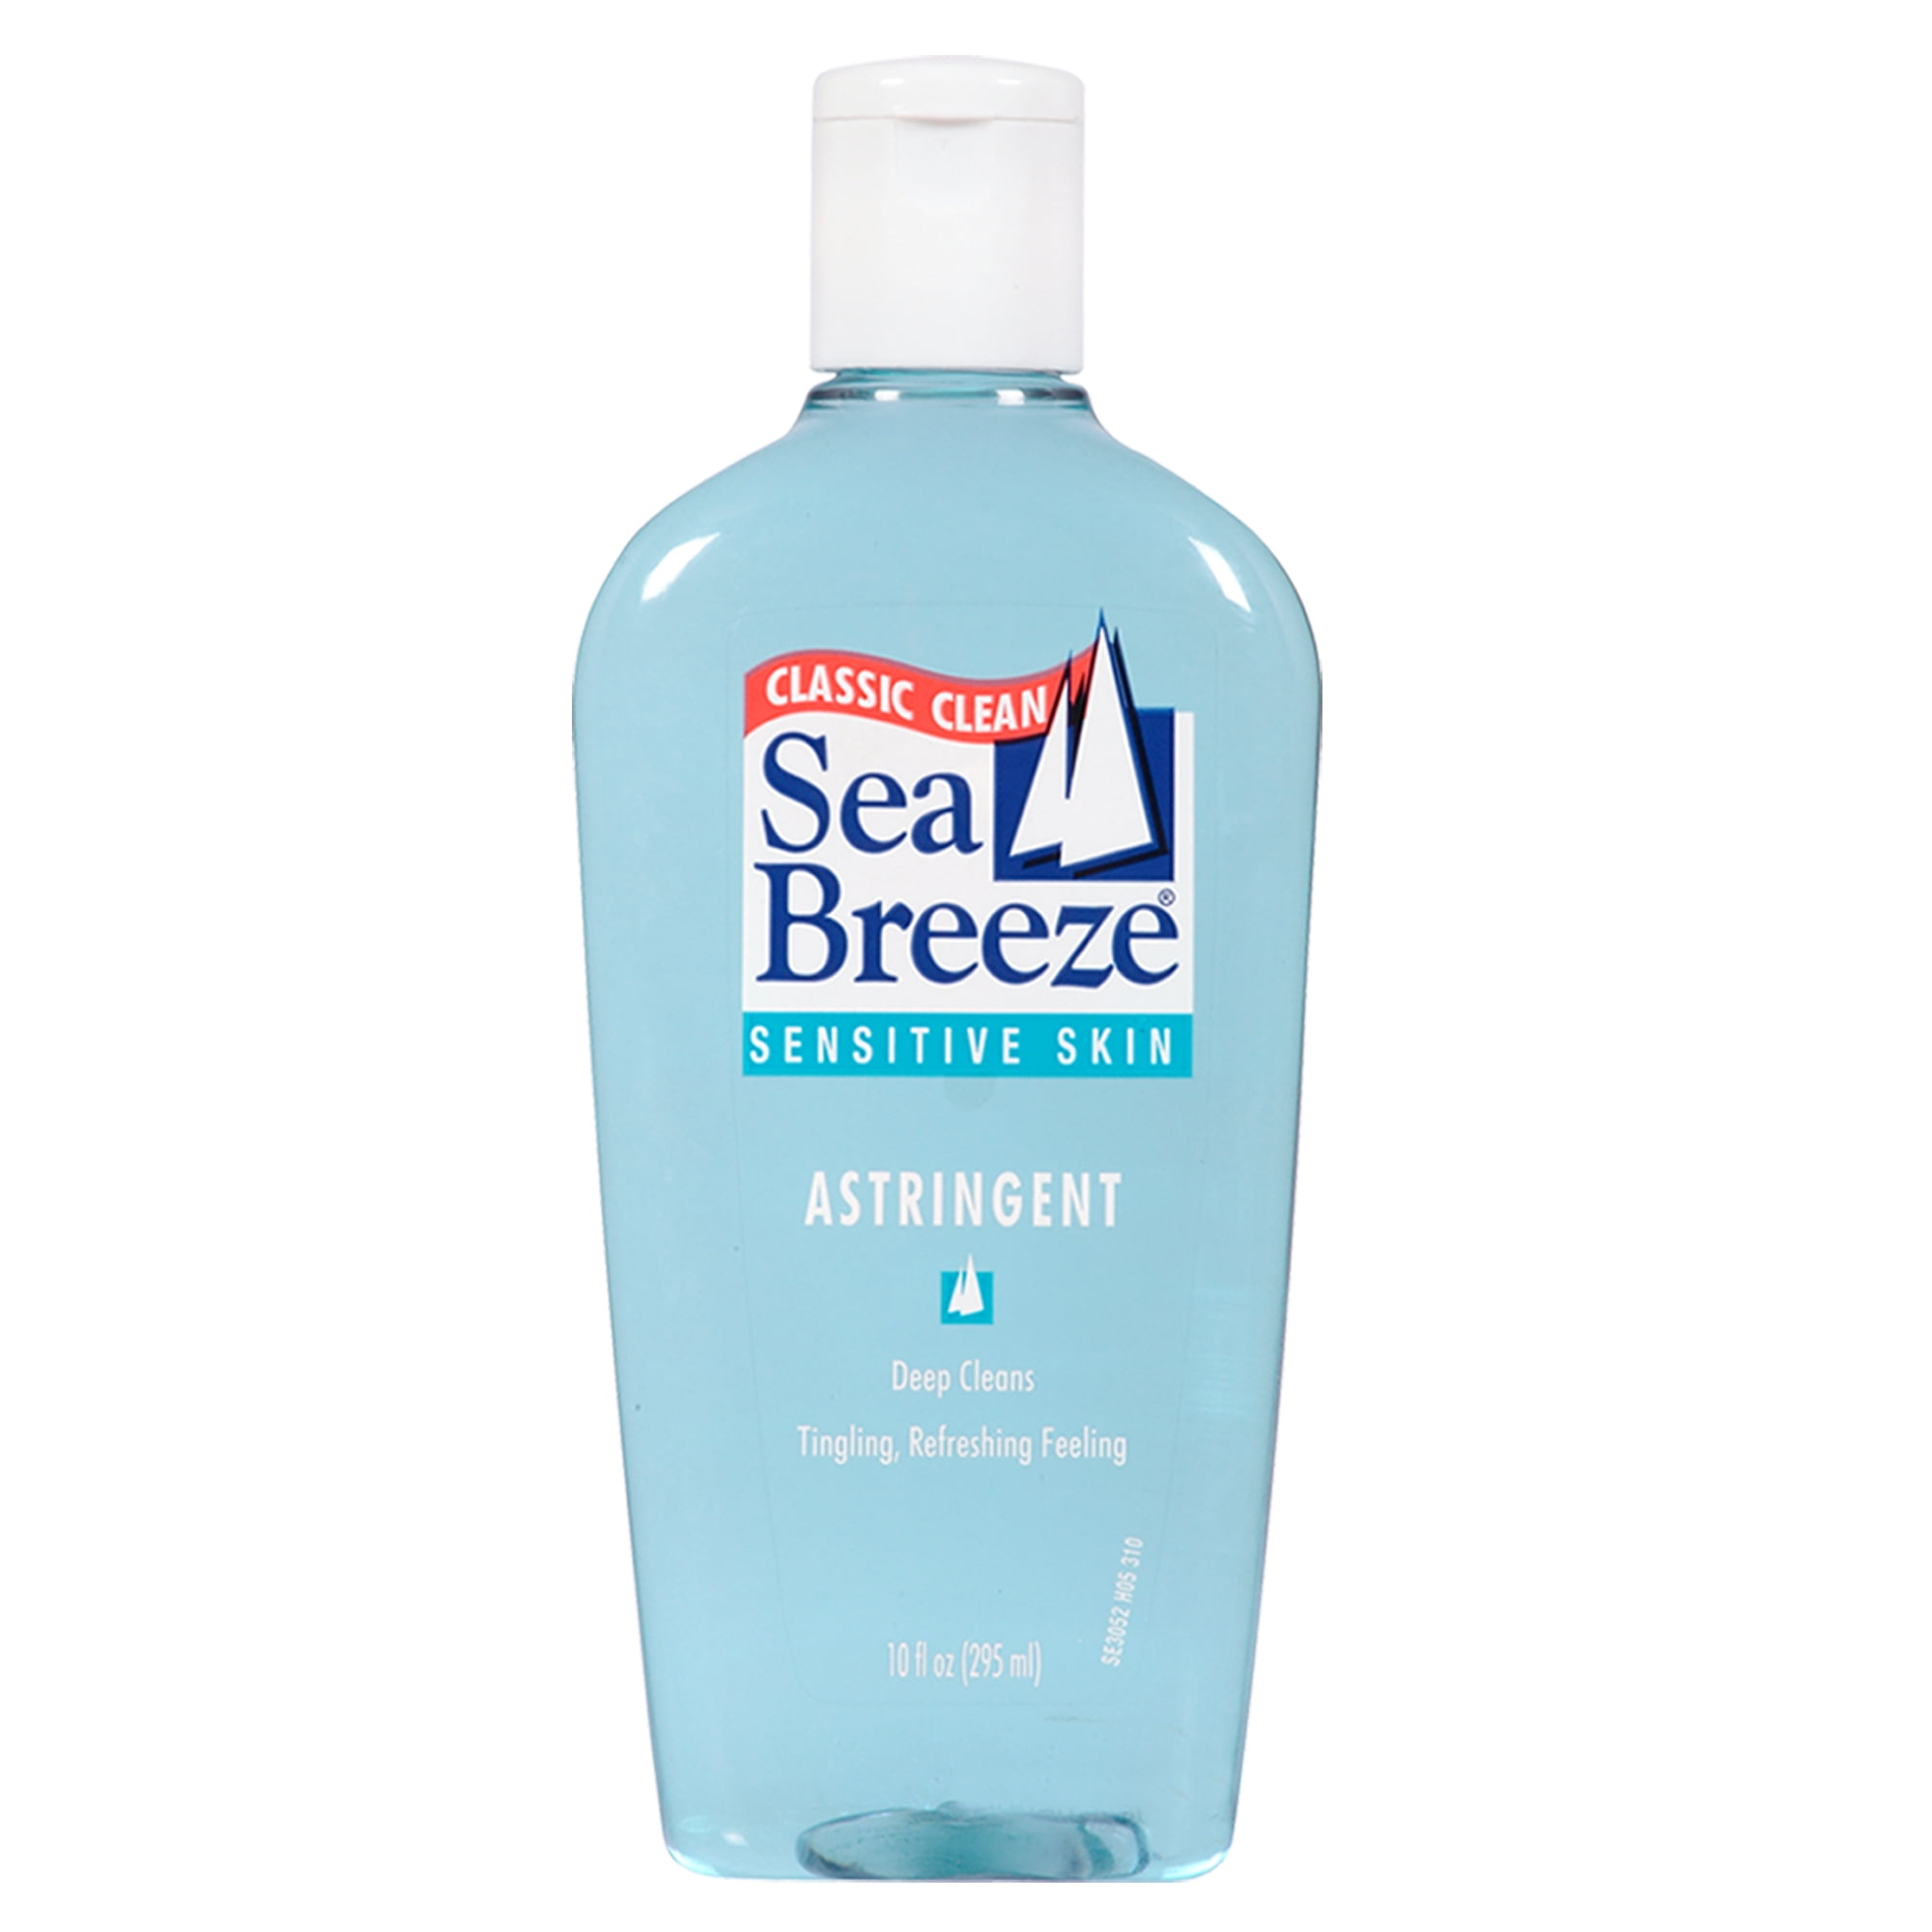 Sea Breeze Sensitive Facial Astringent Skin Cleanser, 10 fluid ounces